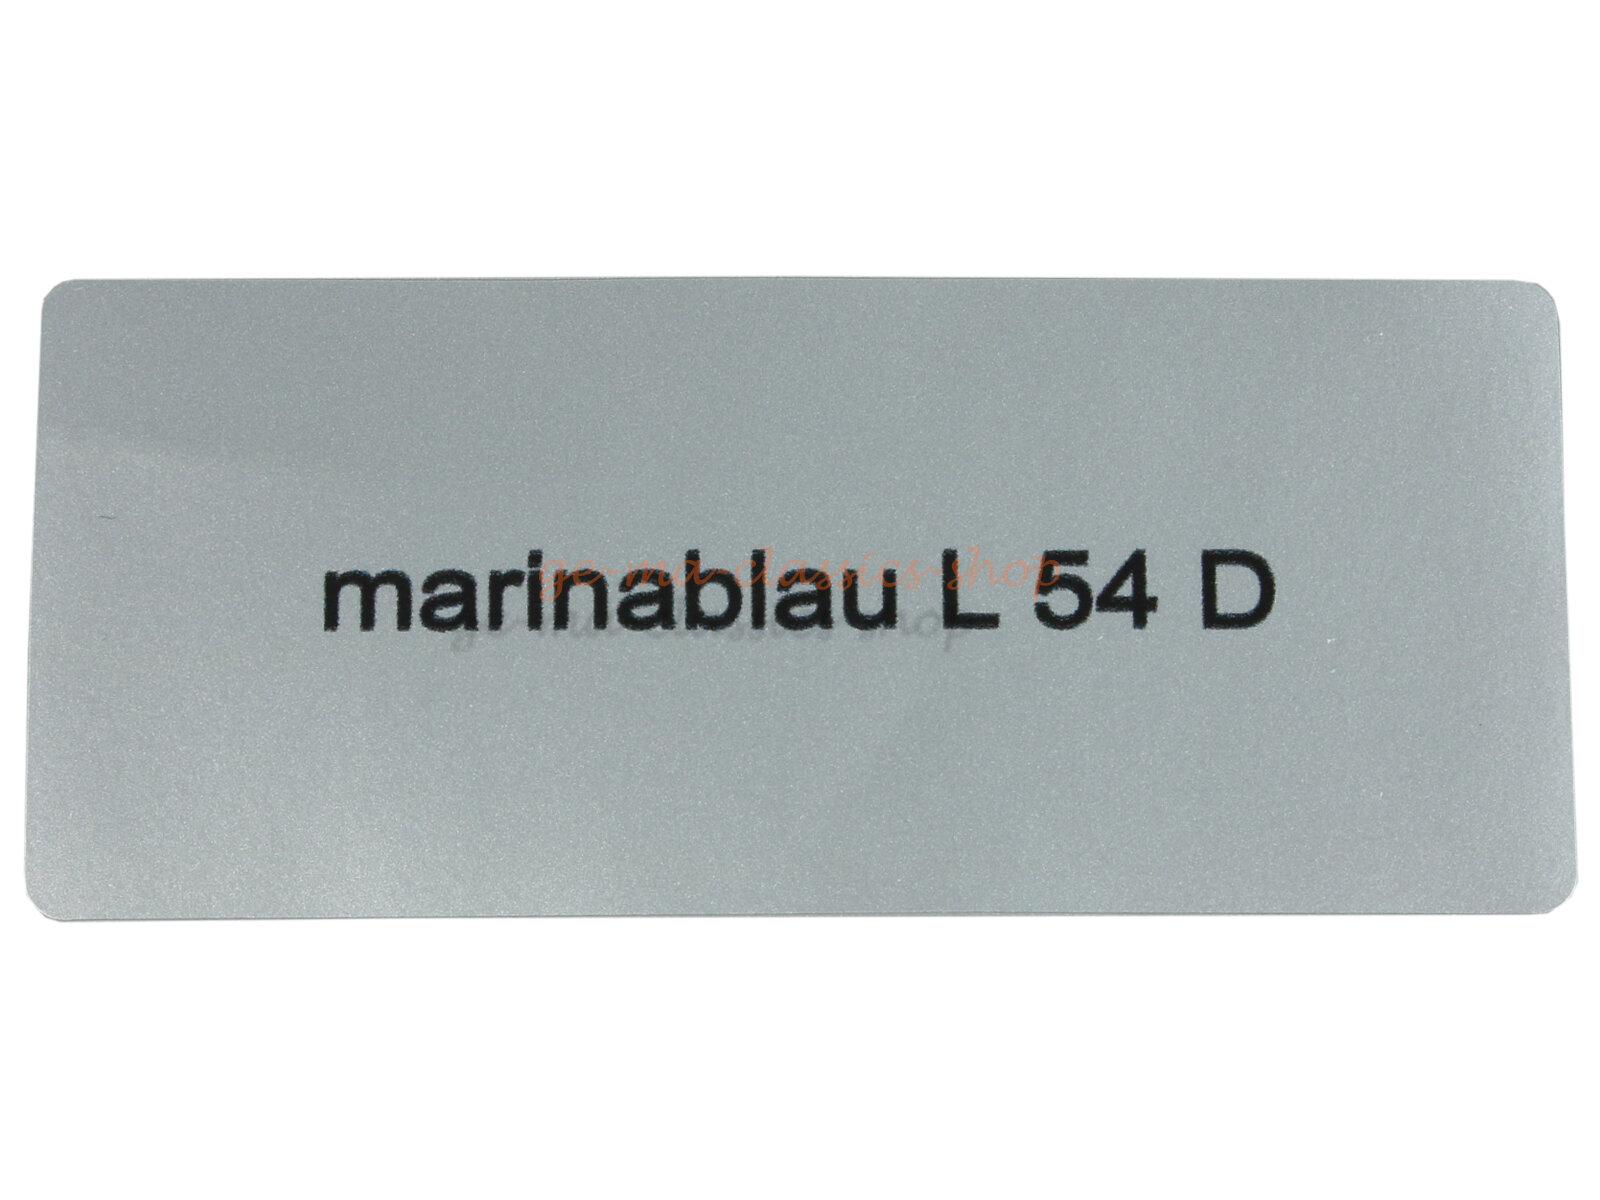 Aufkleber "marinablau L 54 D" Farbcode Sticker